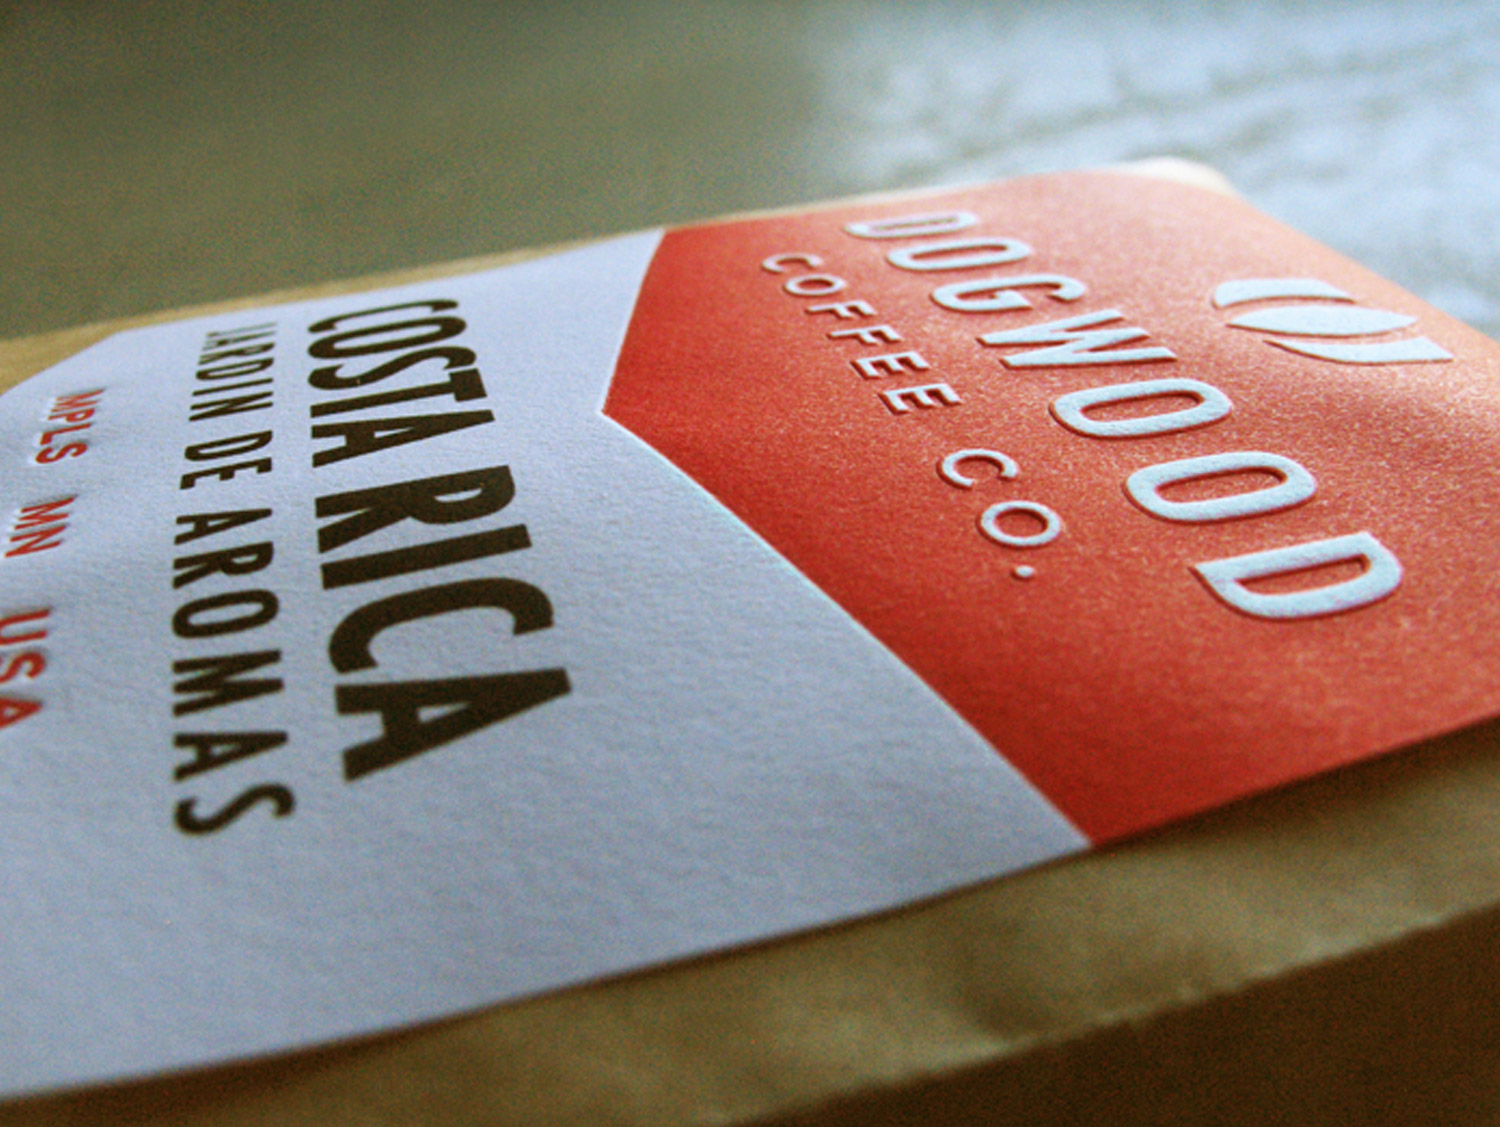 Dogwood-Coffee-Co-13-Packaging-05.jpg